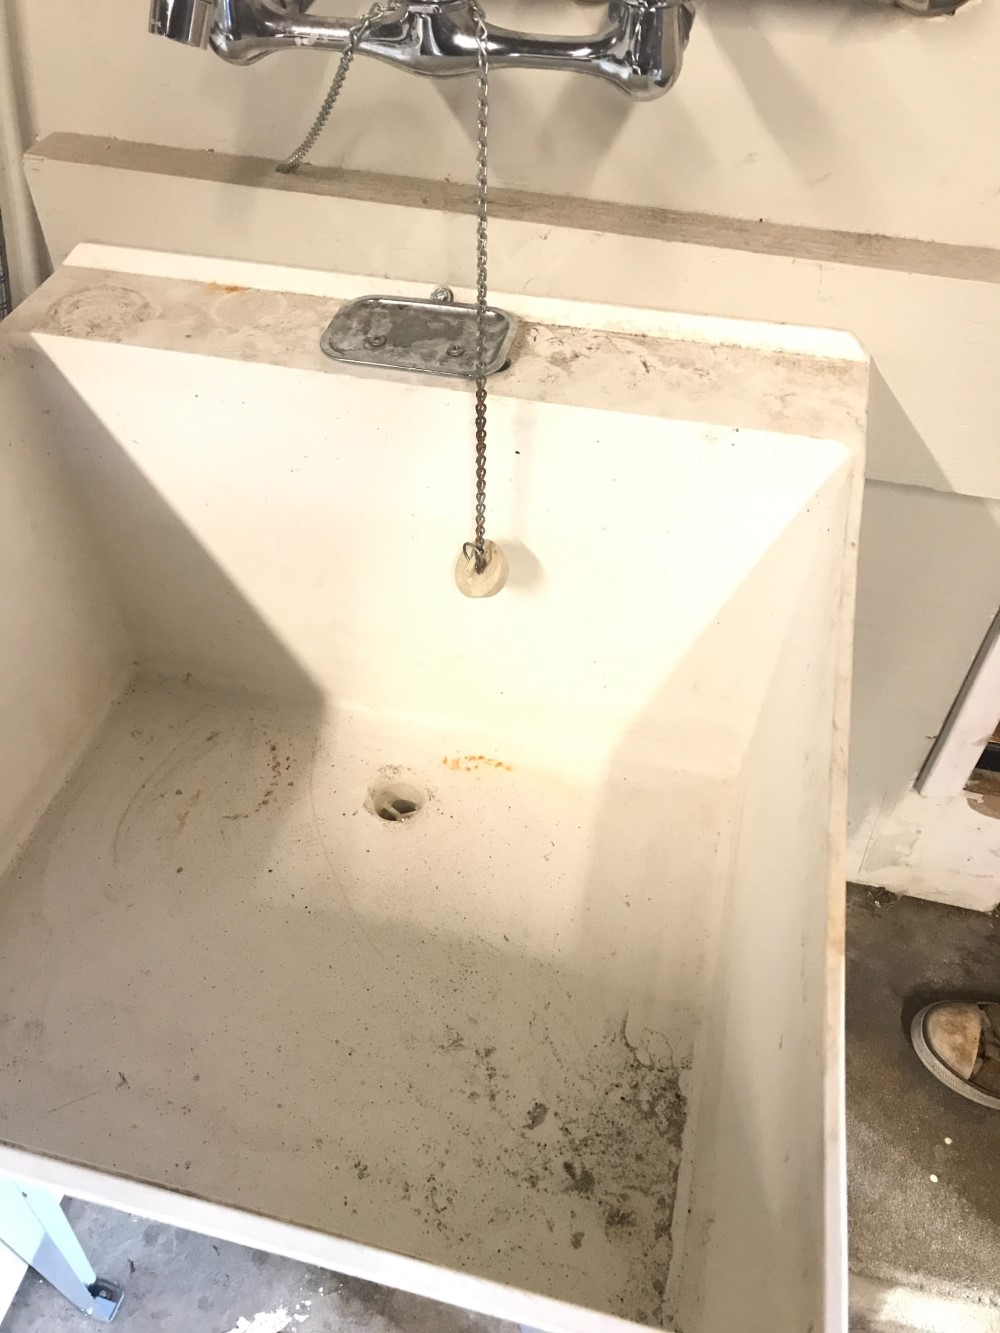 Modesto laundry sink stopped up